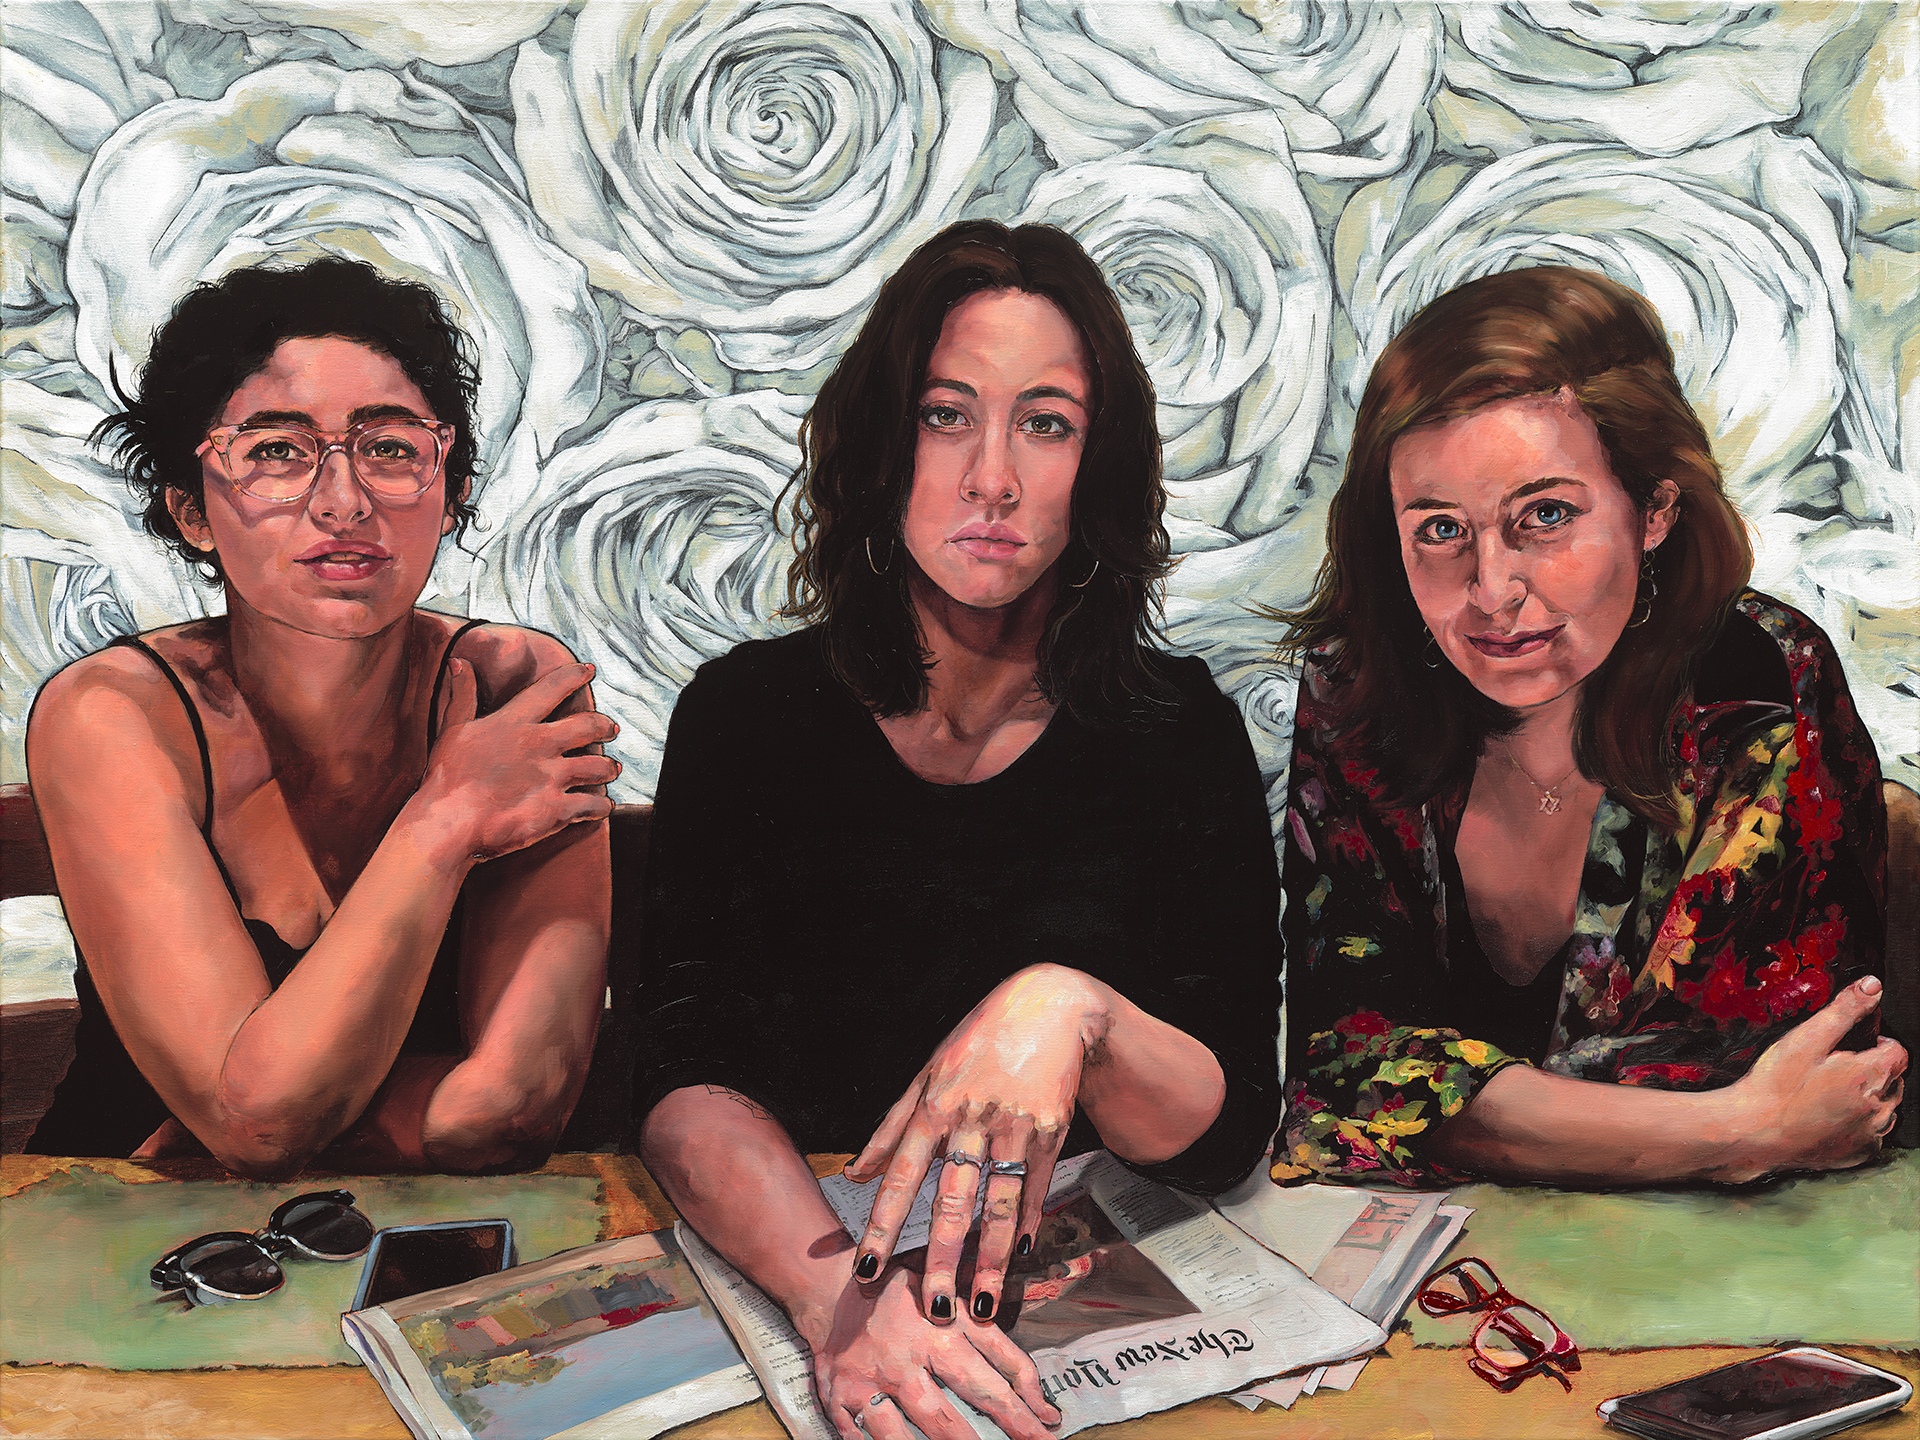 Contemporary realism - "The Sunday Girls" by Sherri Wolfgang